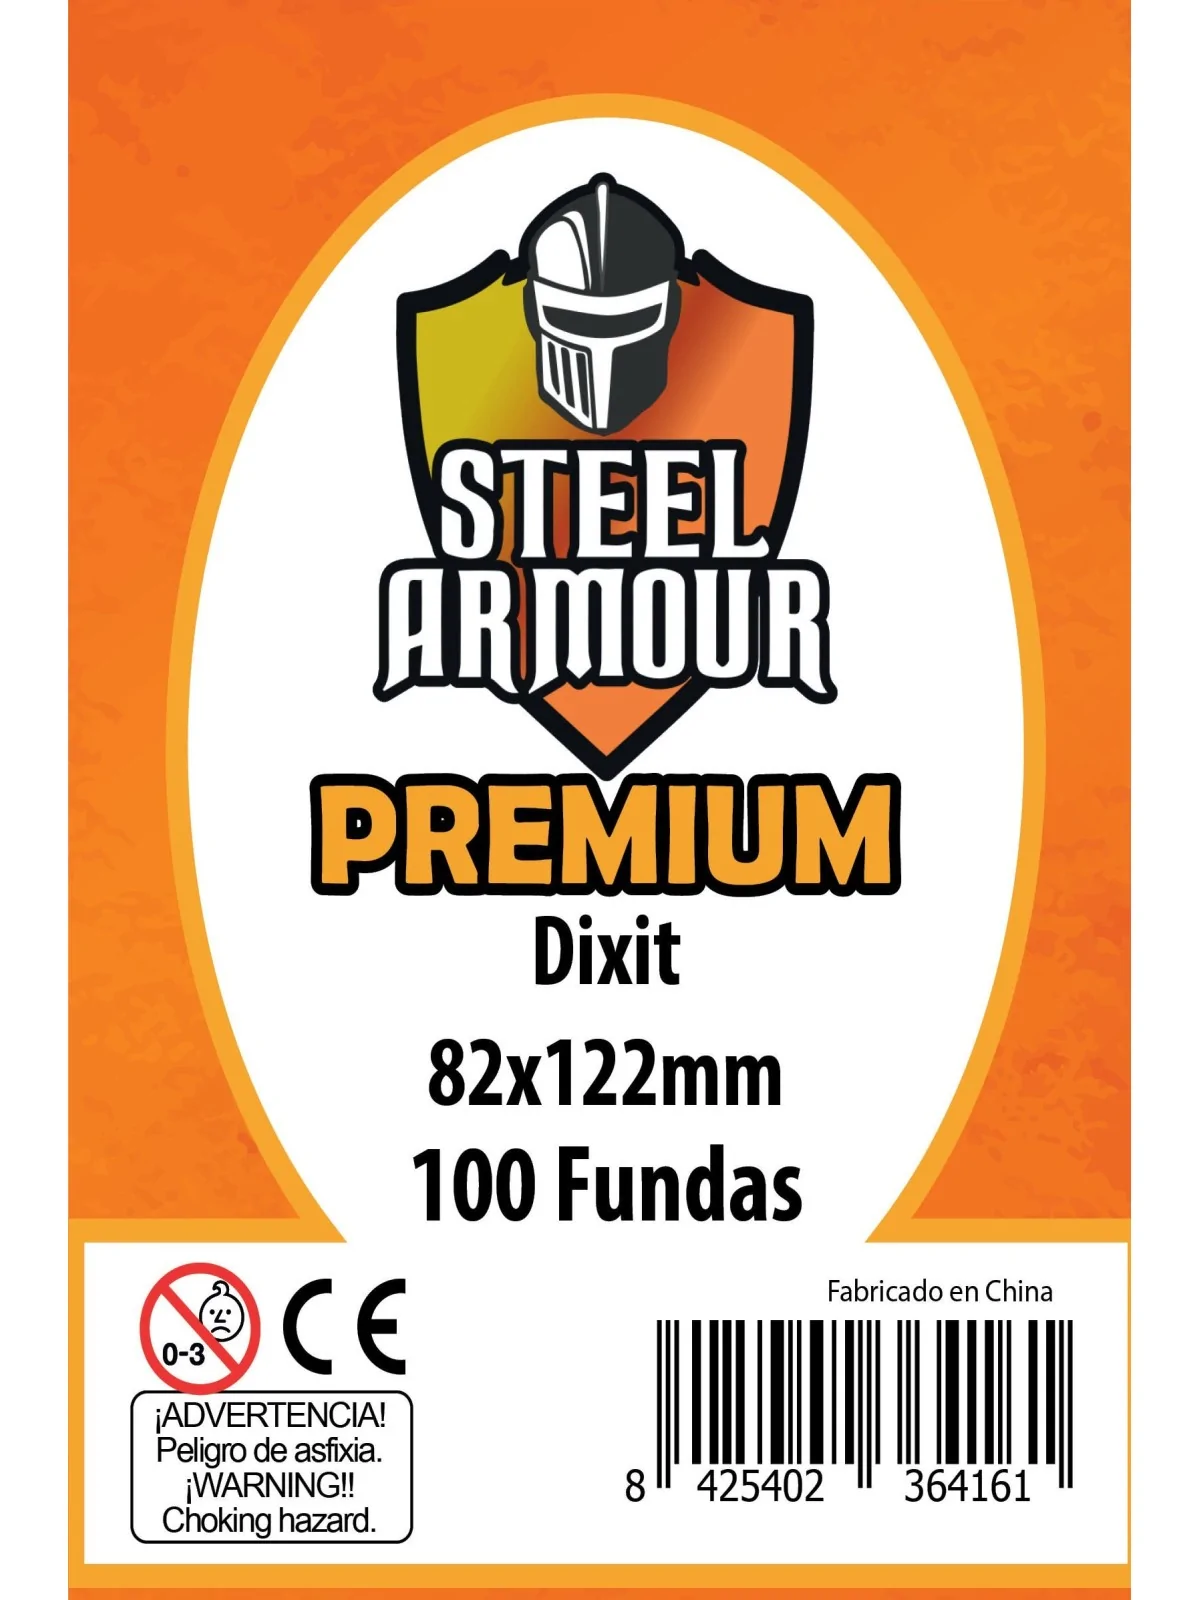 Comprar Steel Armour Dixit Premium (Pack of 100) (82x122mm) barato al 